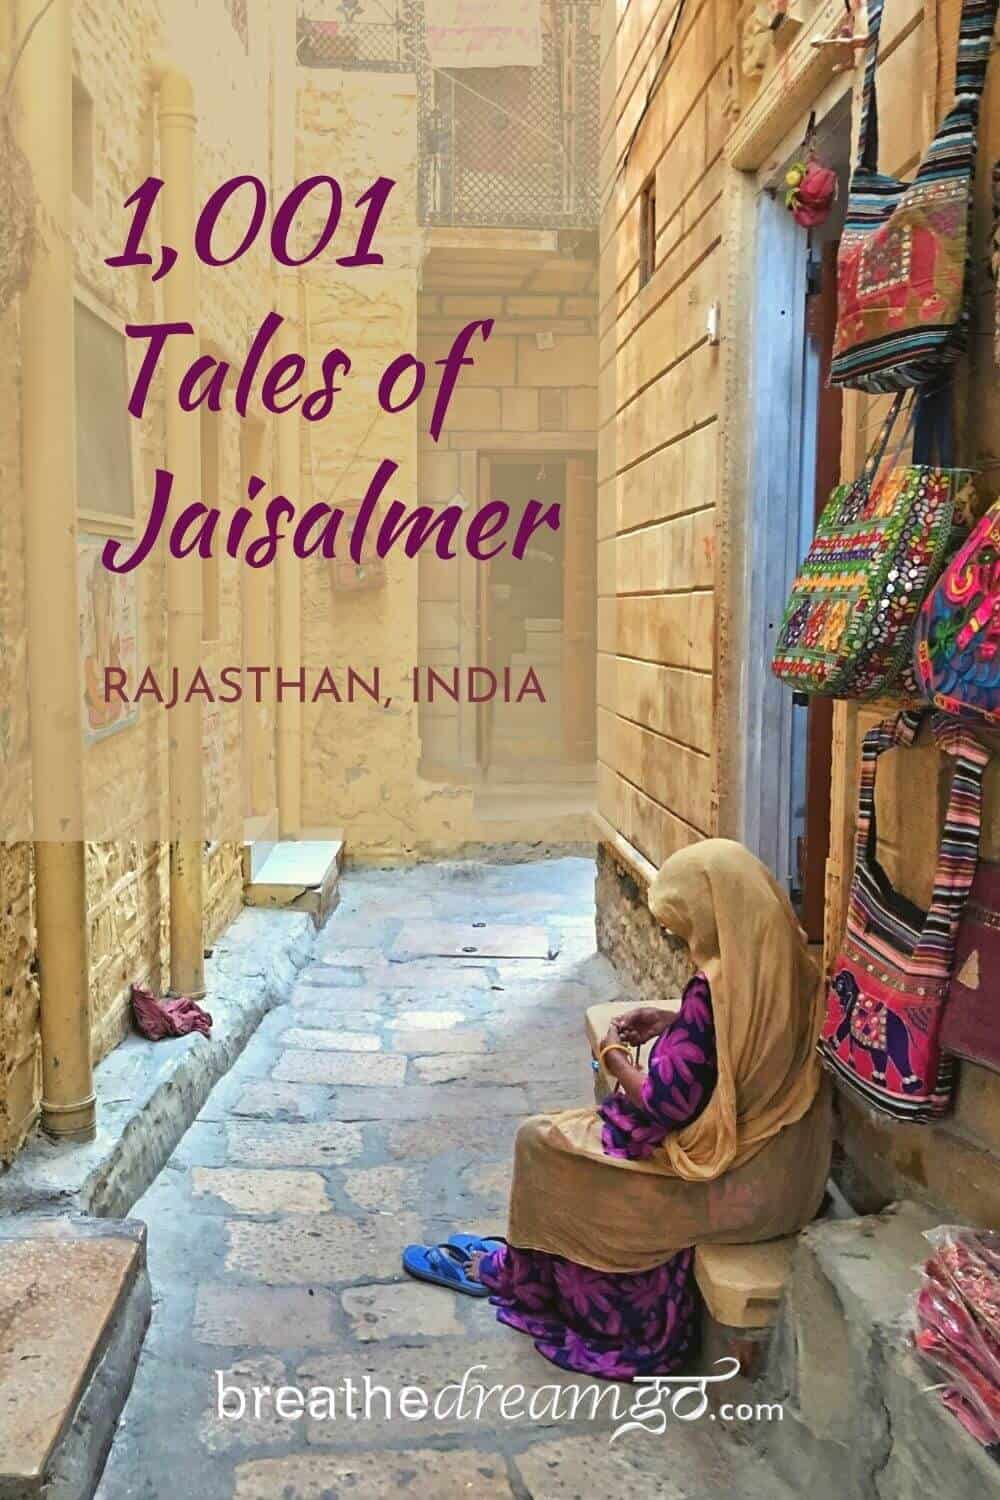 Tales of Jaisalmer, Rajasthan, India